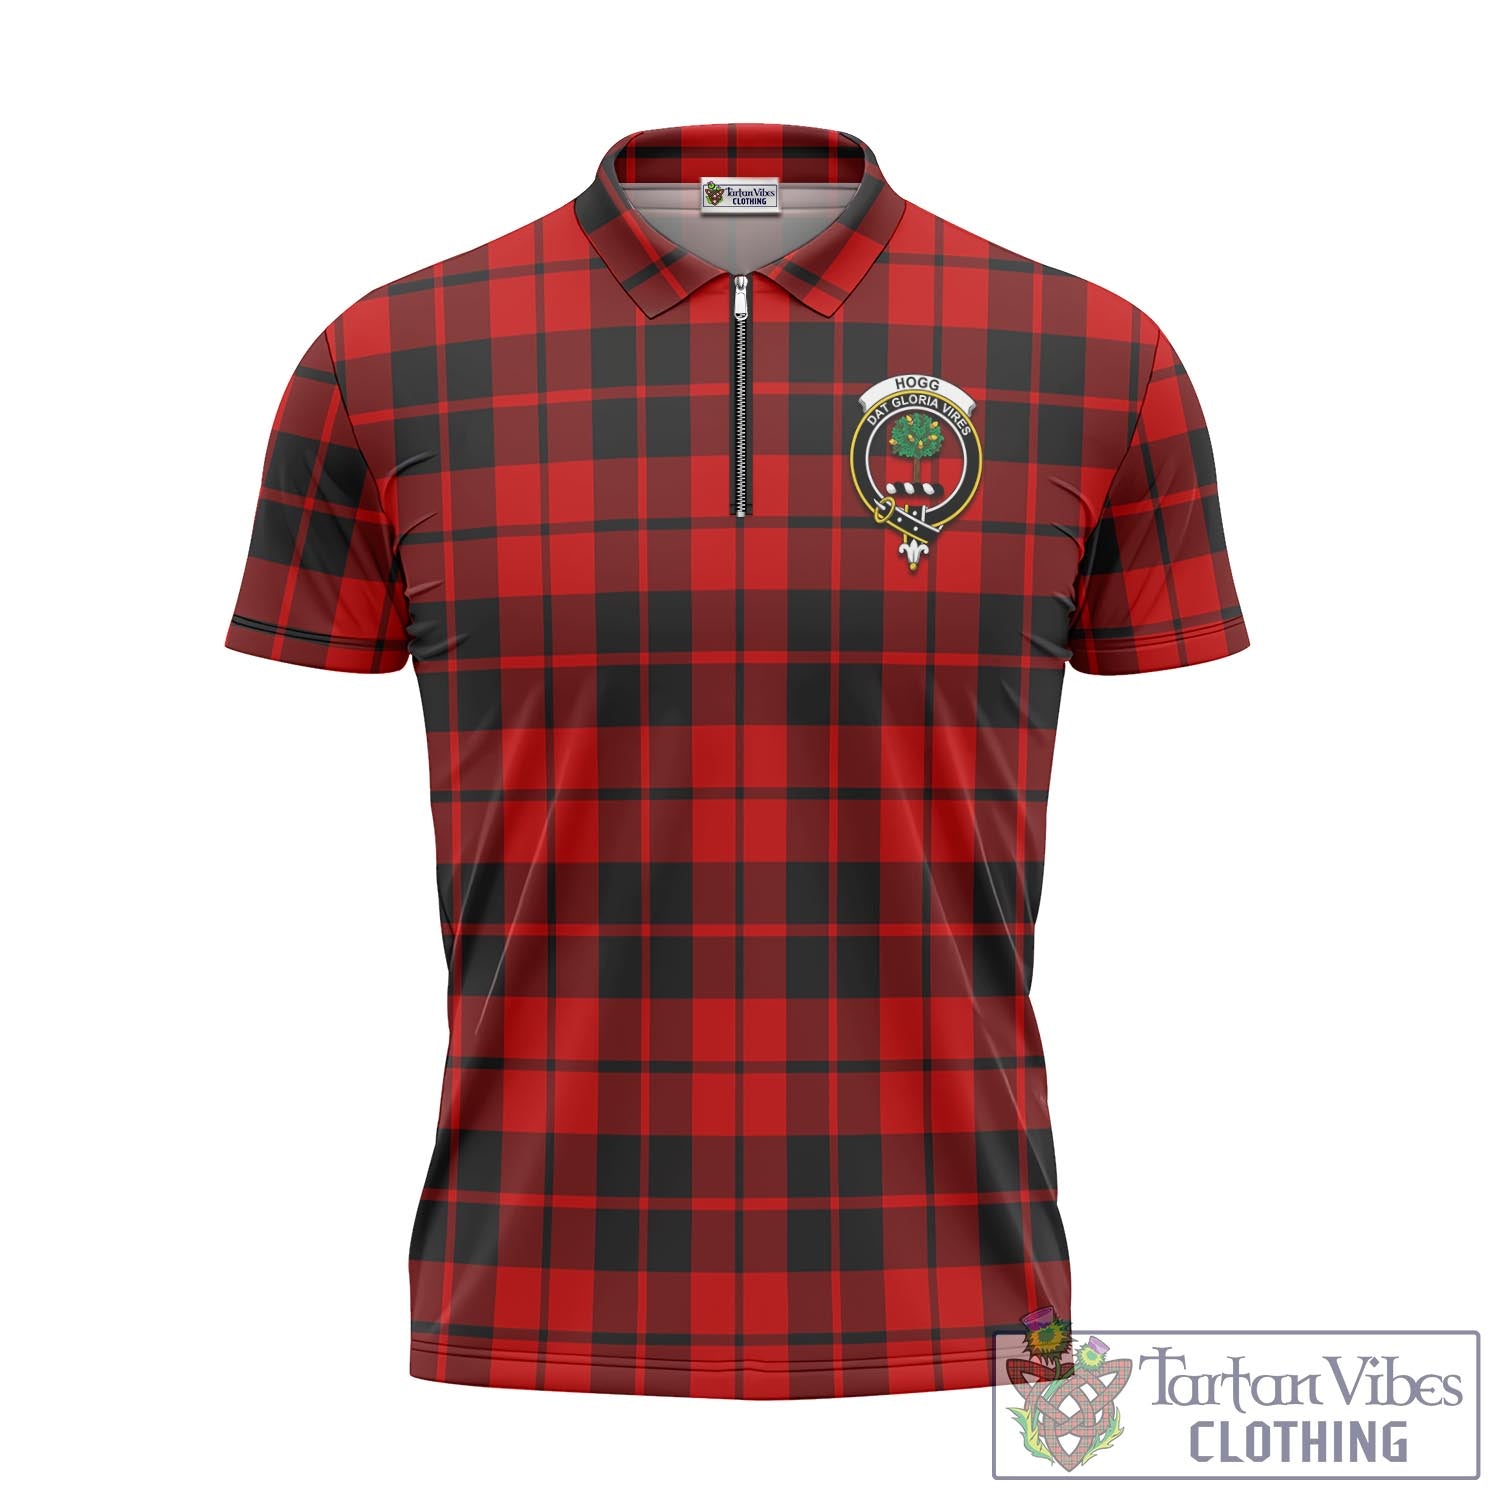 Tartan Vibes Clothing Hogg Tartan Zipper Polo Shirt with Family Crest